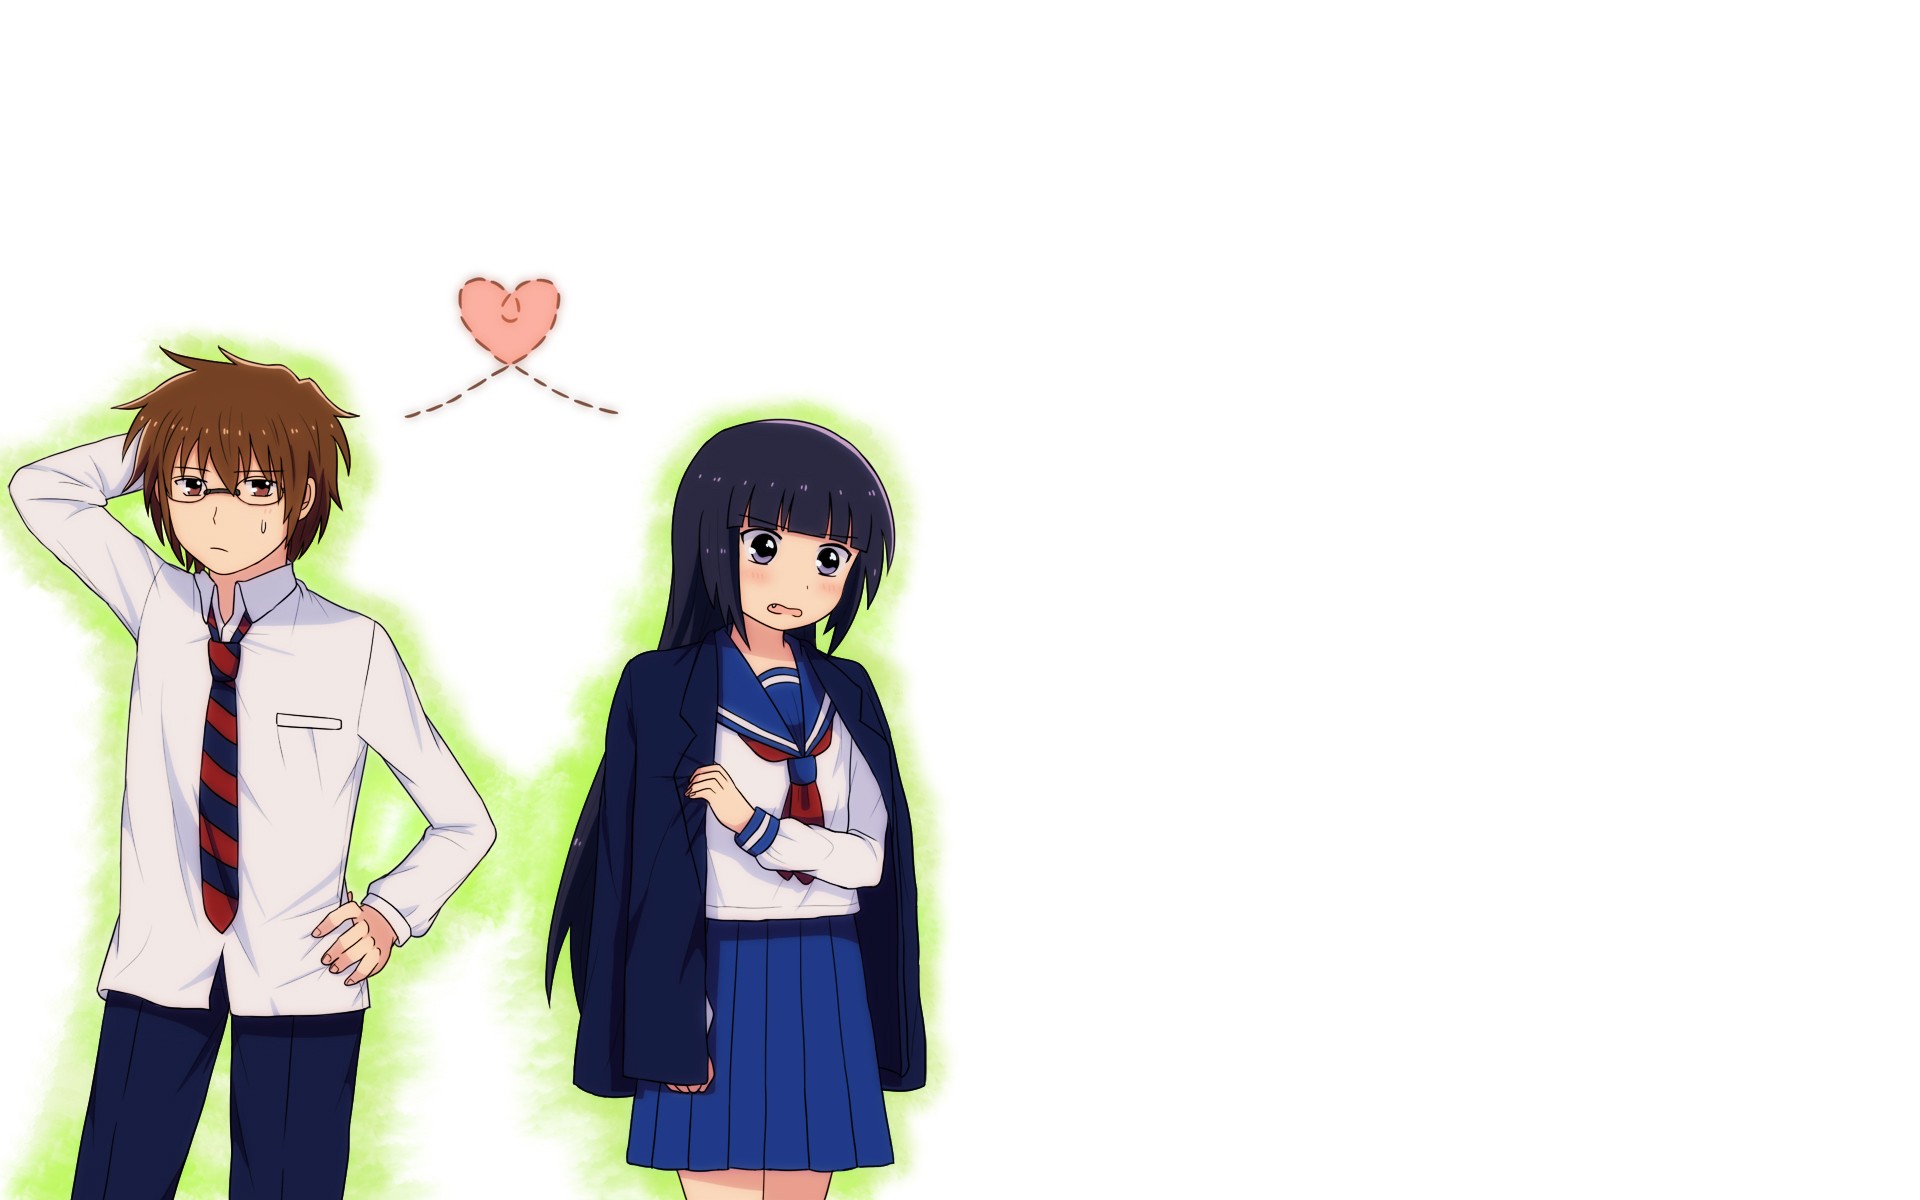 Anime Boy And Girl Love Wallpapers